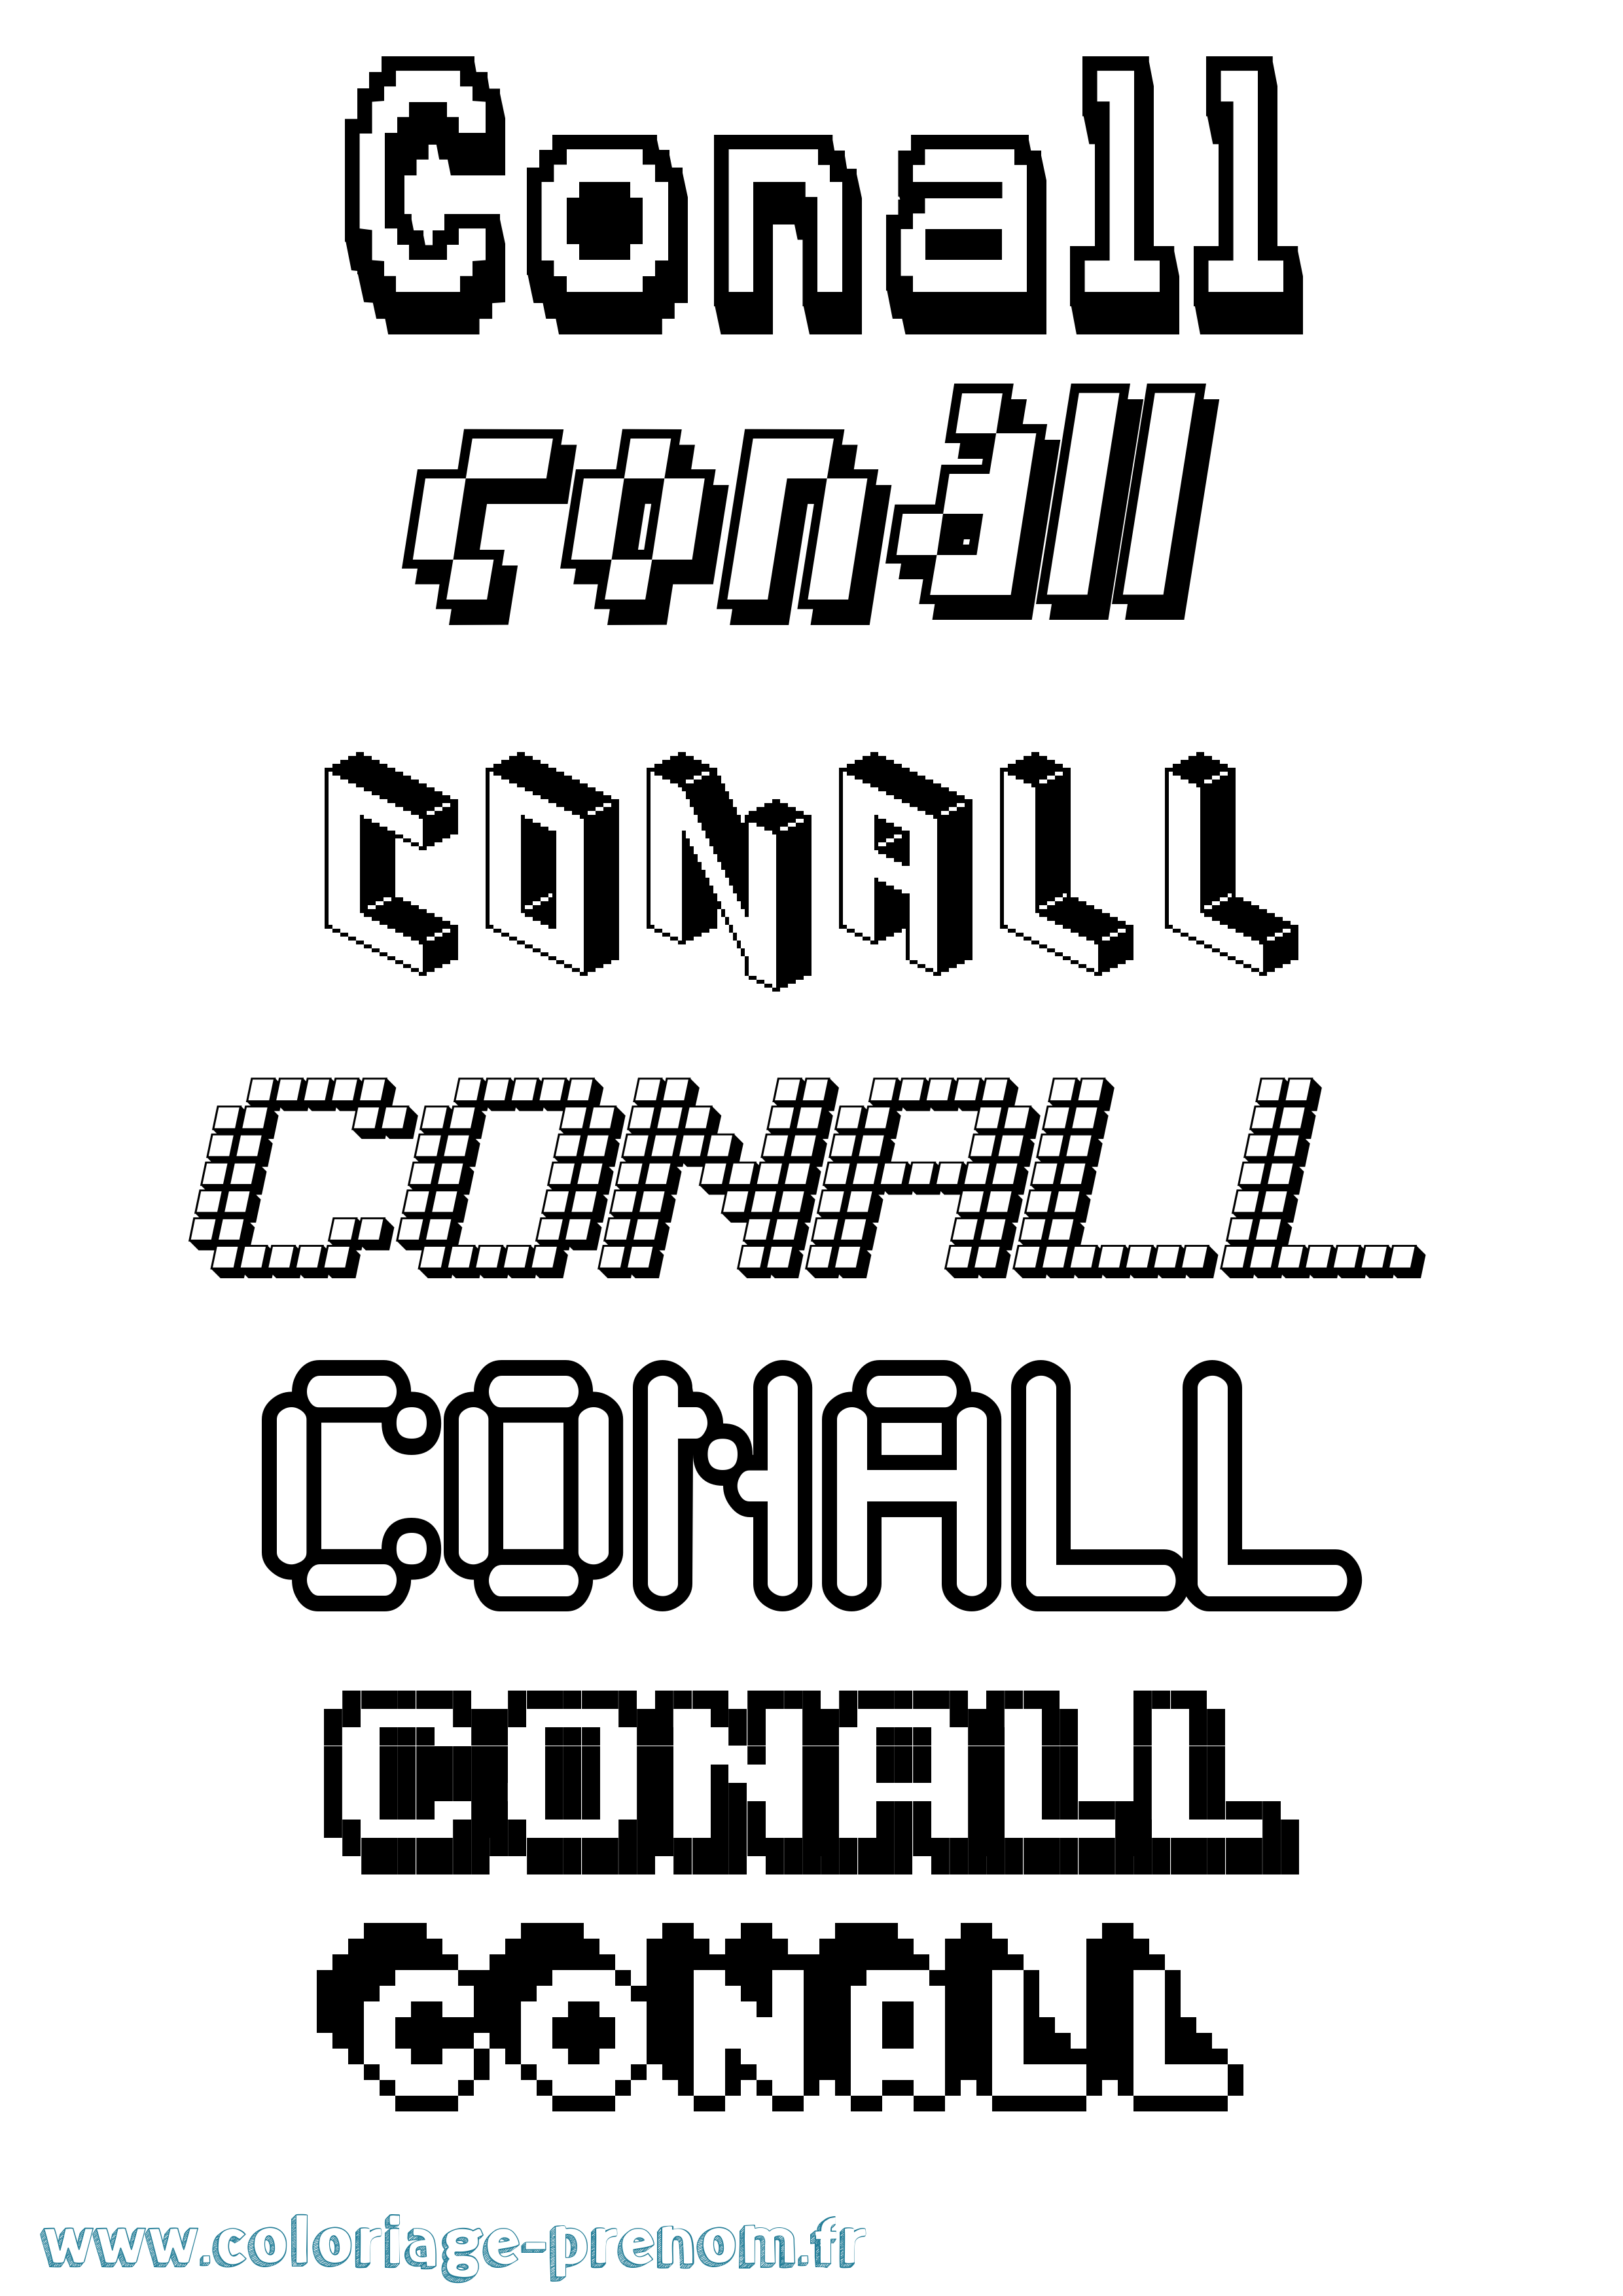 Coloriage prénom Conall Pixel